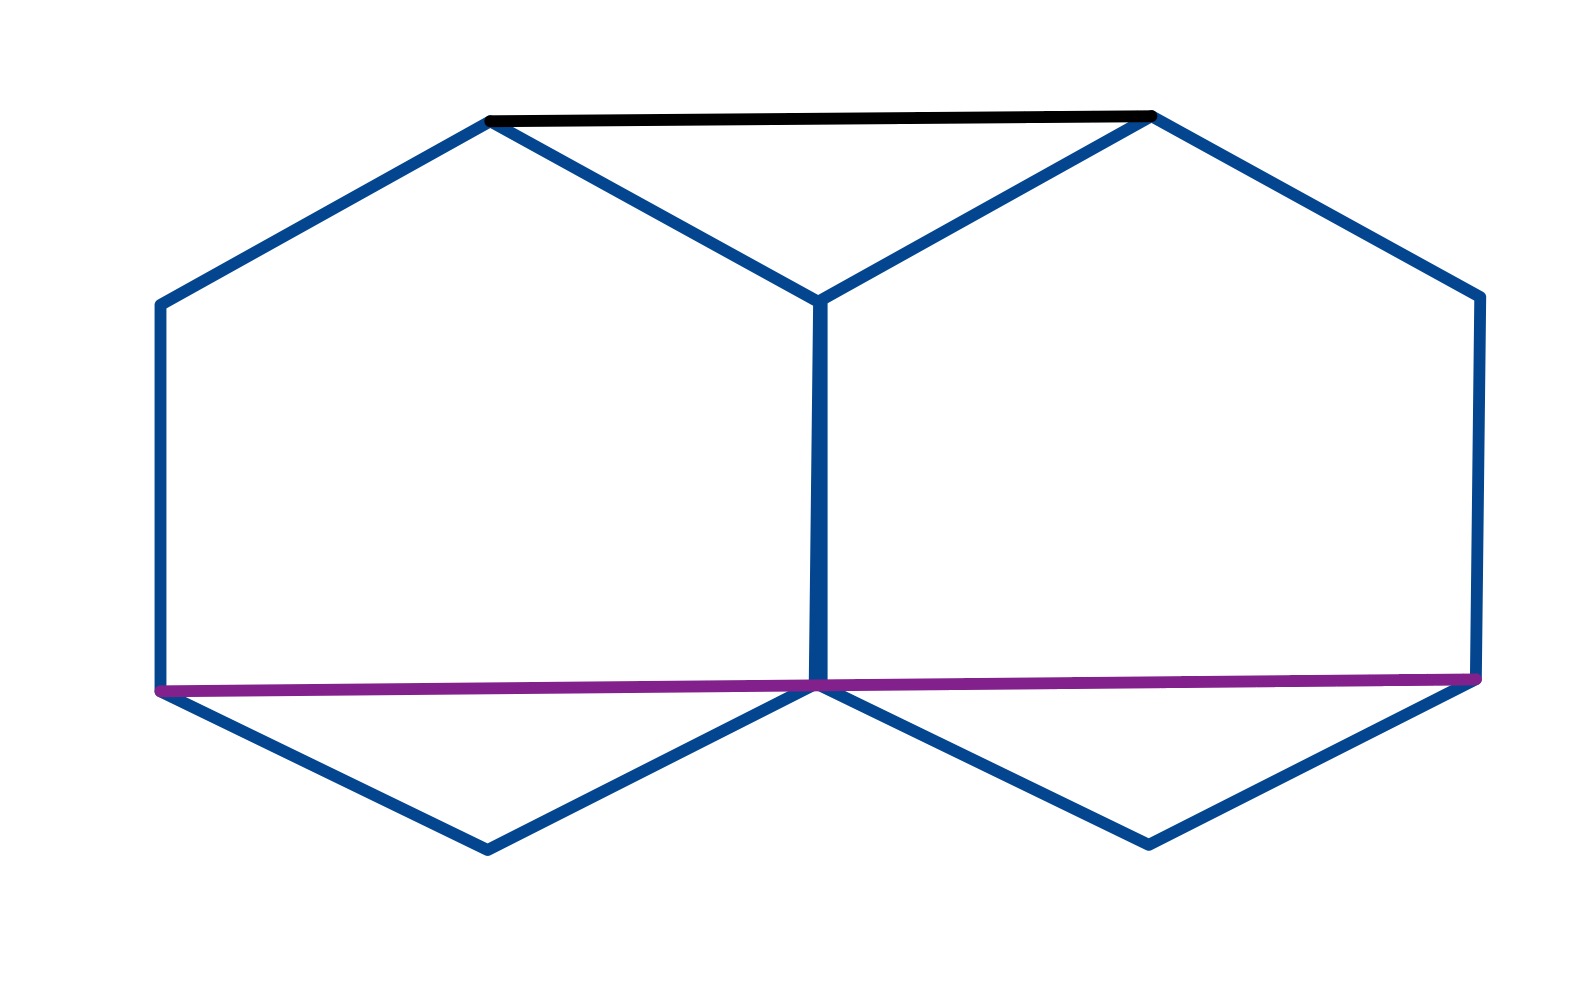 Two regular hexagons ii same